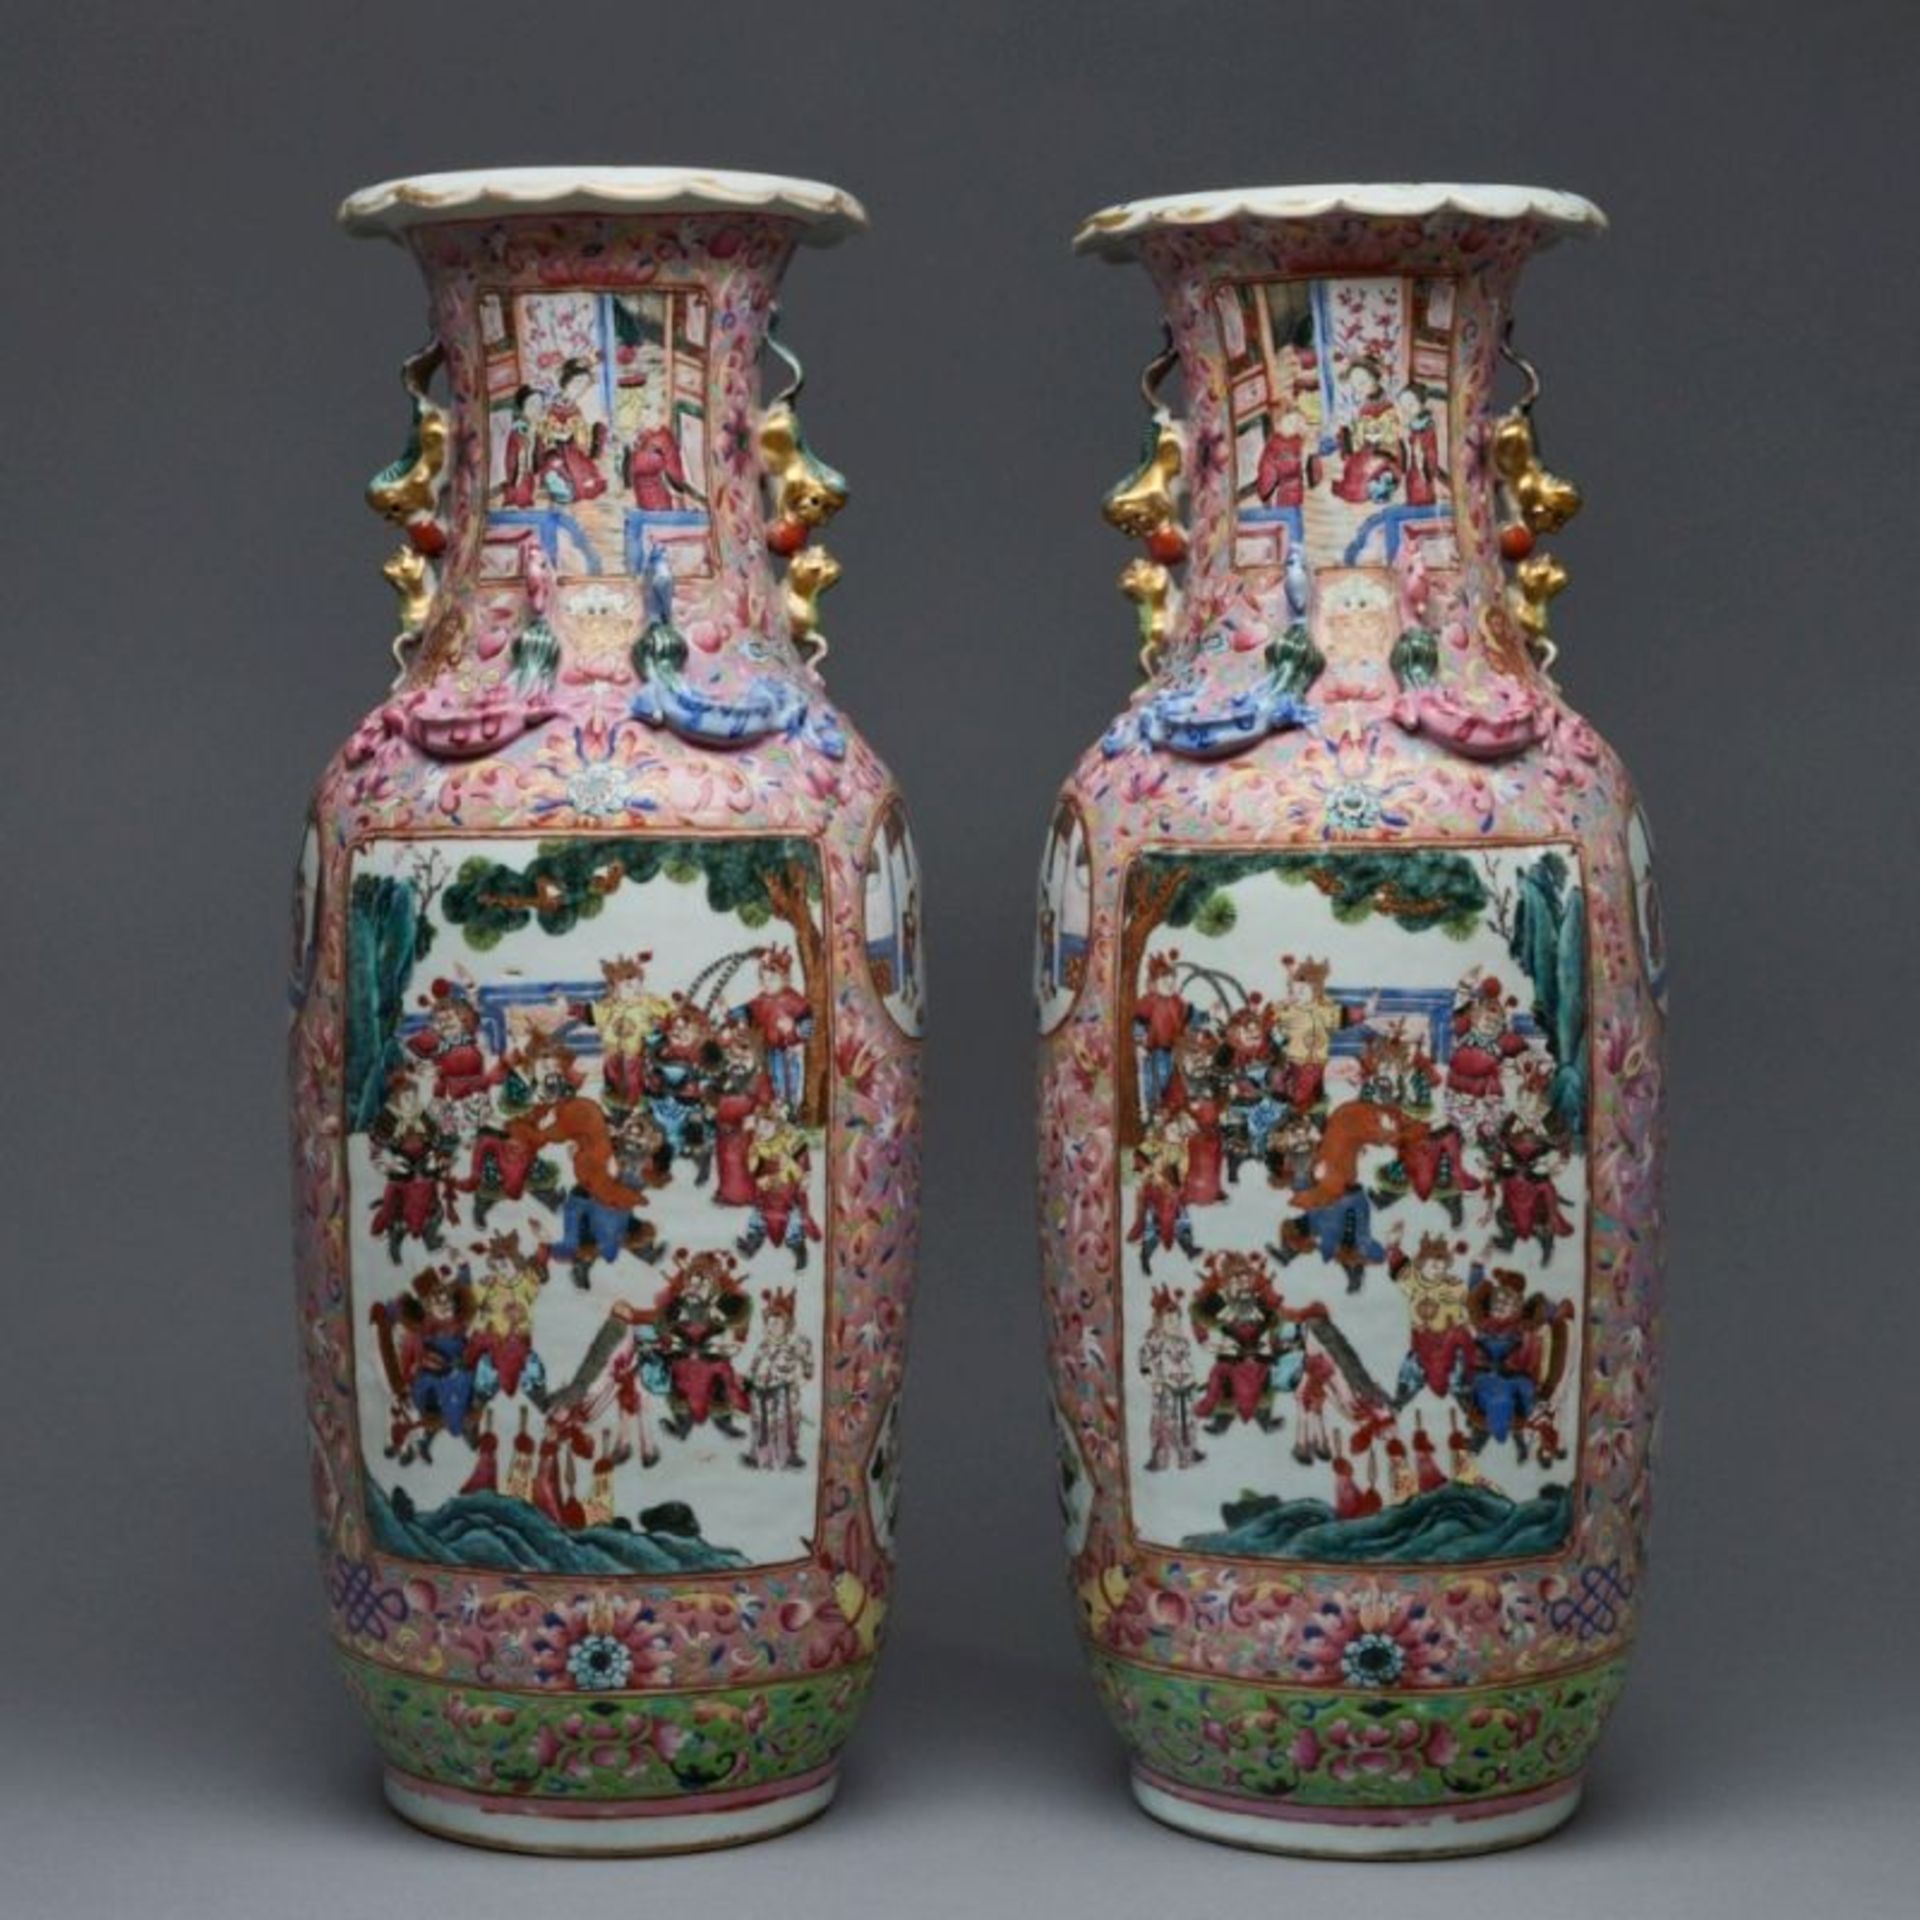 Paar Famille rose Bodenvasen, China, Qing Dynastie, zweite Hälfte 19. Jahrhundert